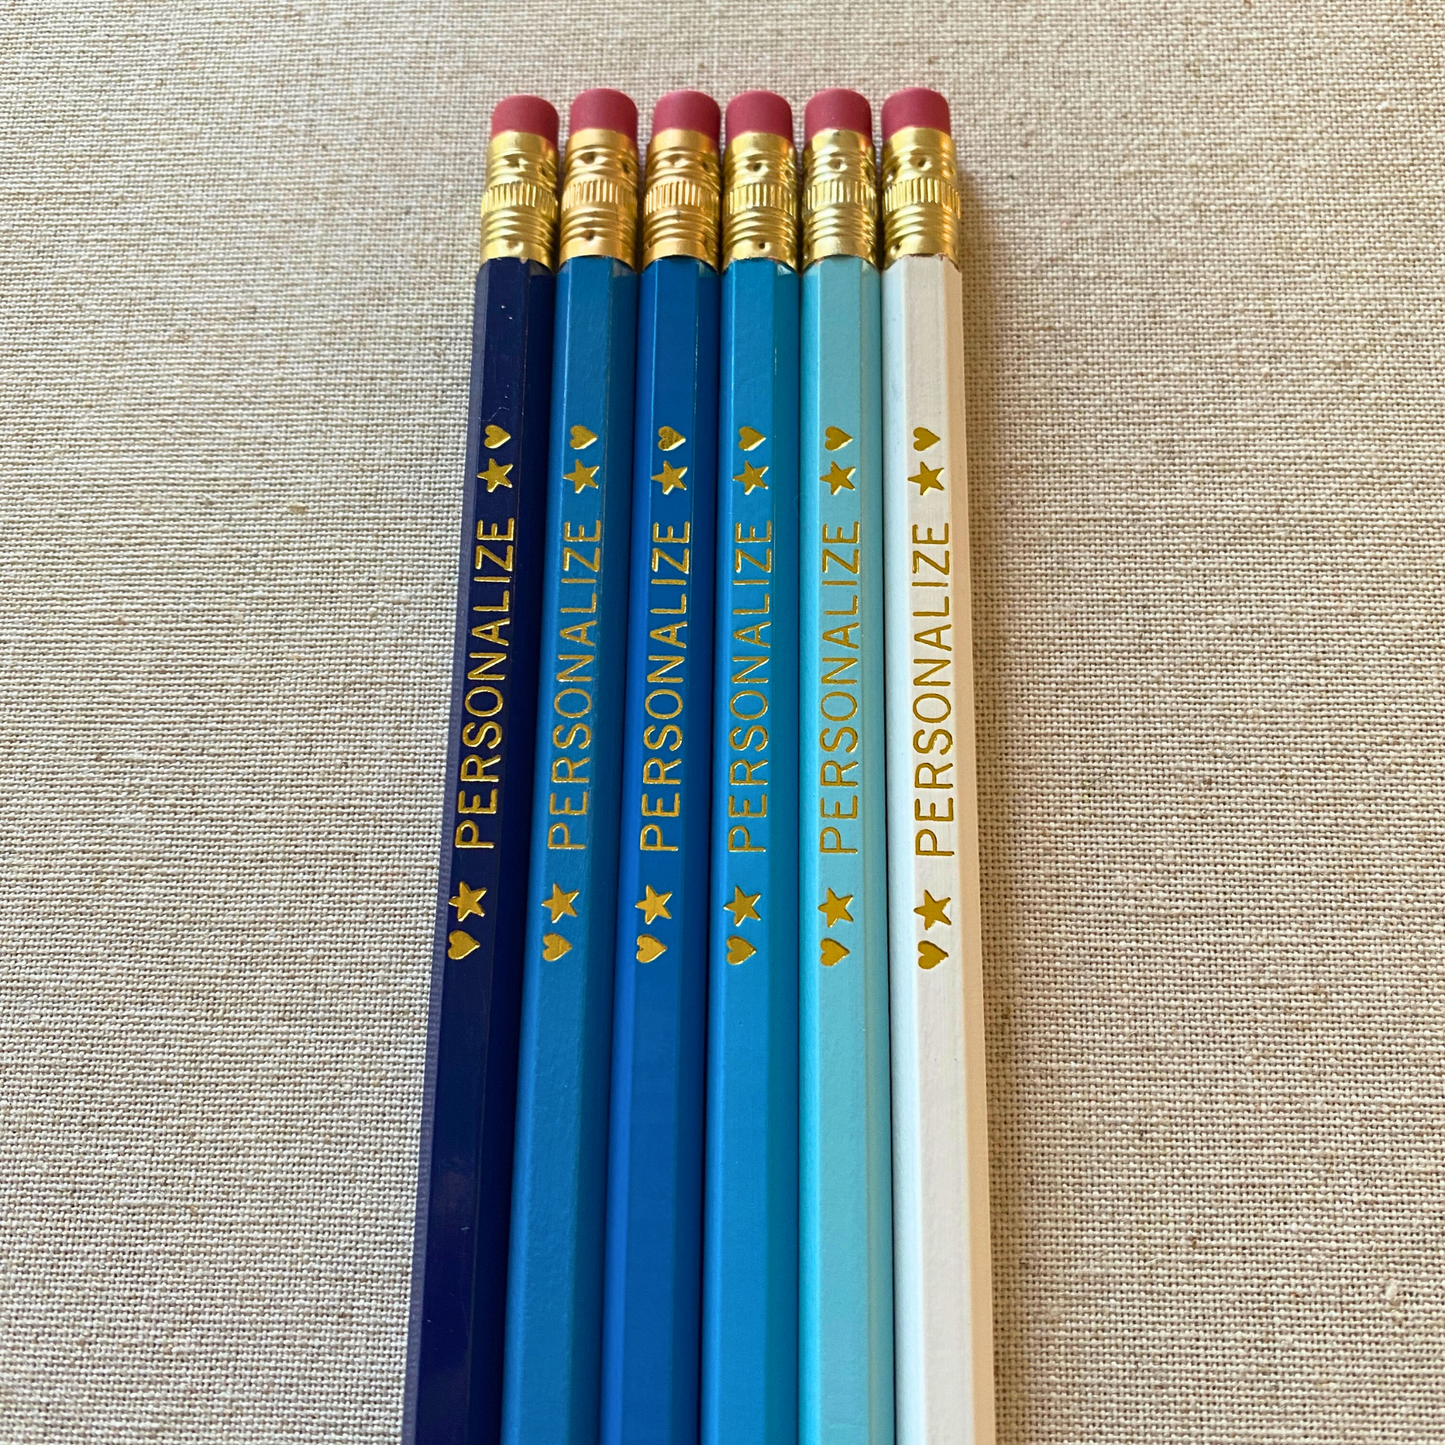 6 Personalized Pencil Set OXFORD BLUES